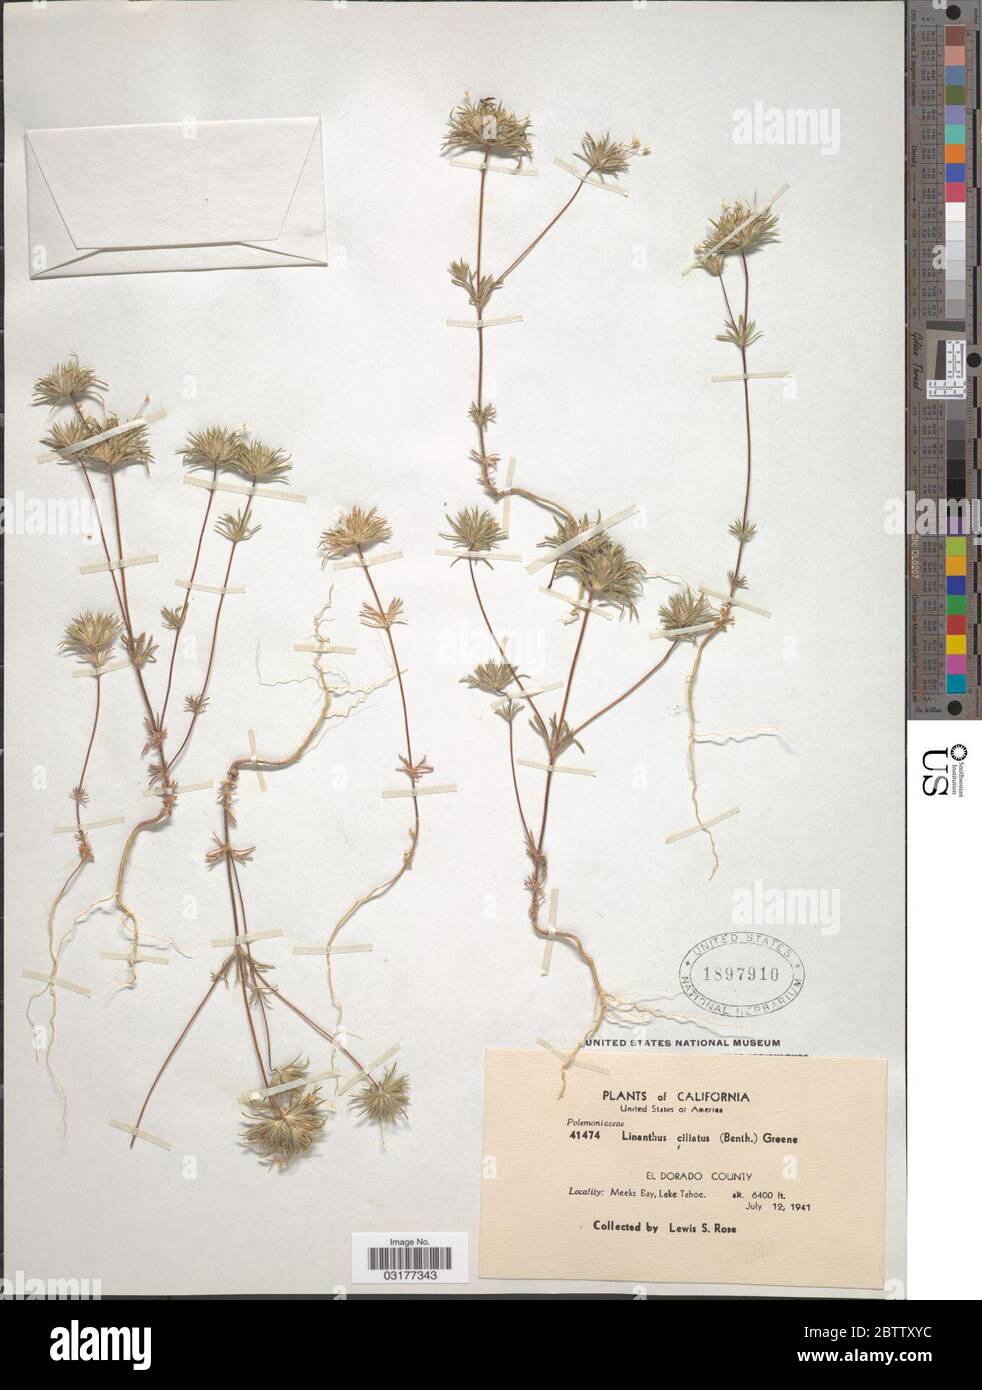 Linanthus ciliatus Benth Greene. Stock Photo